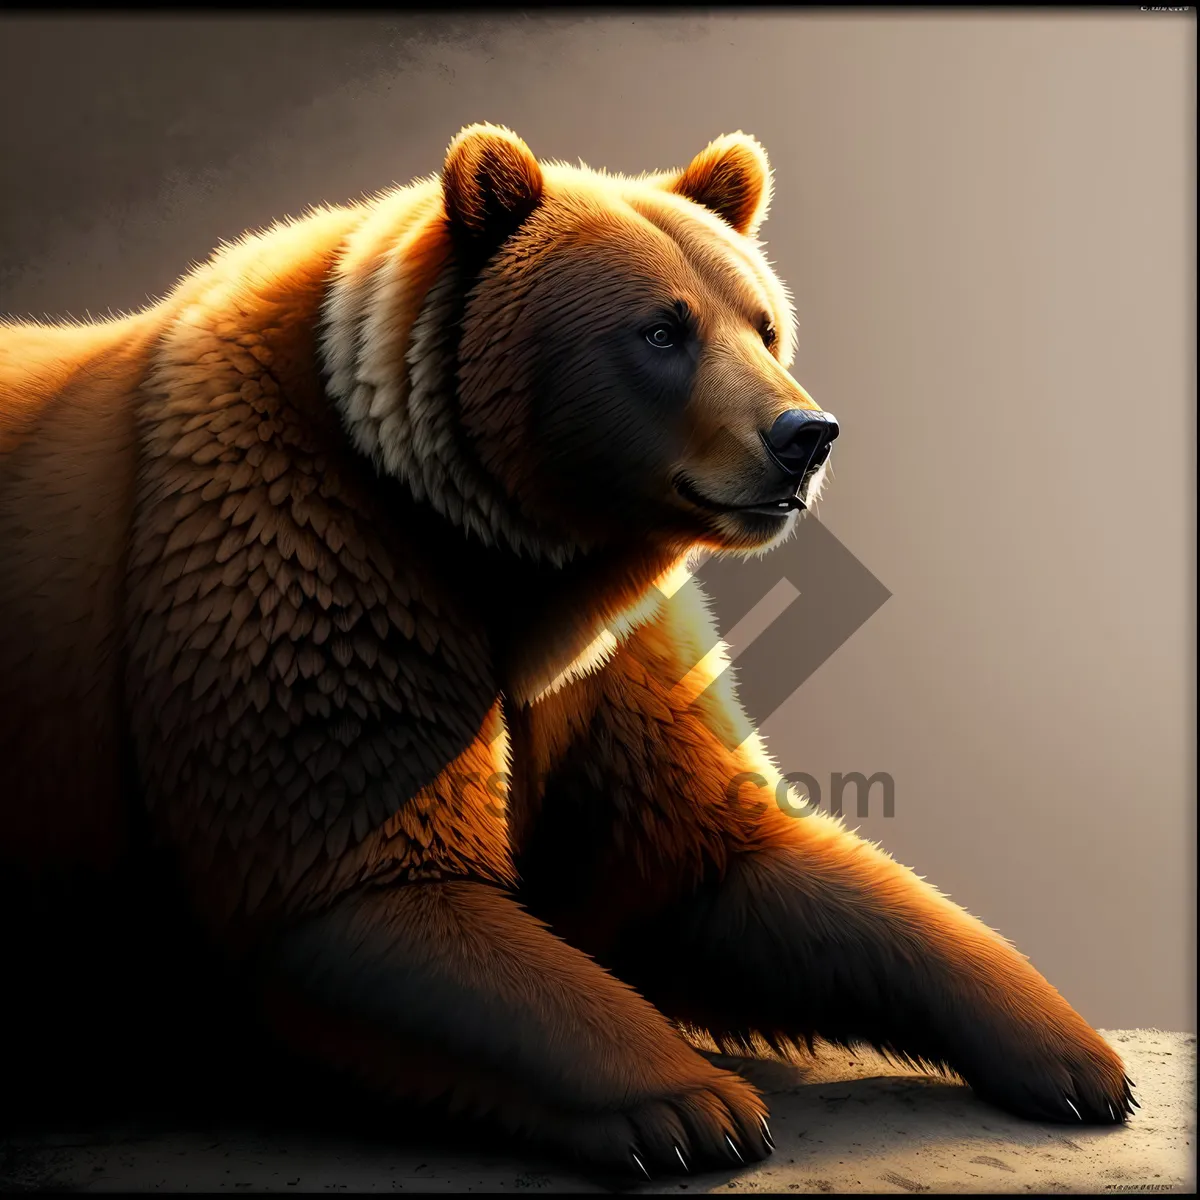 Picture of Adorable Brown Bear in Wildlife Habitat